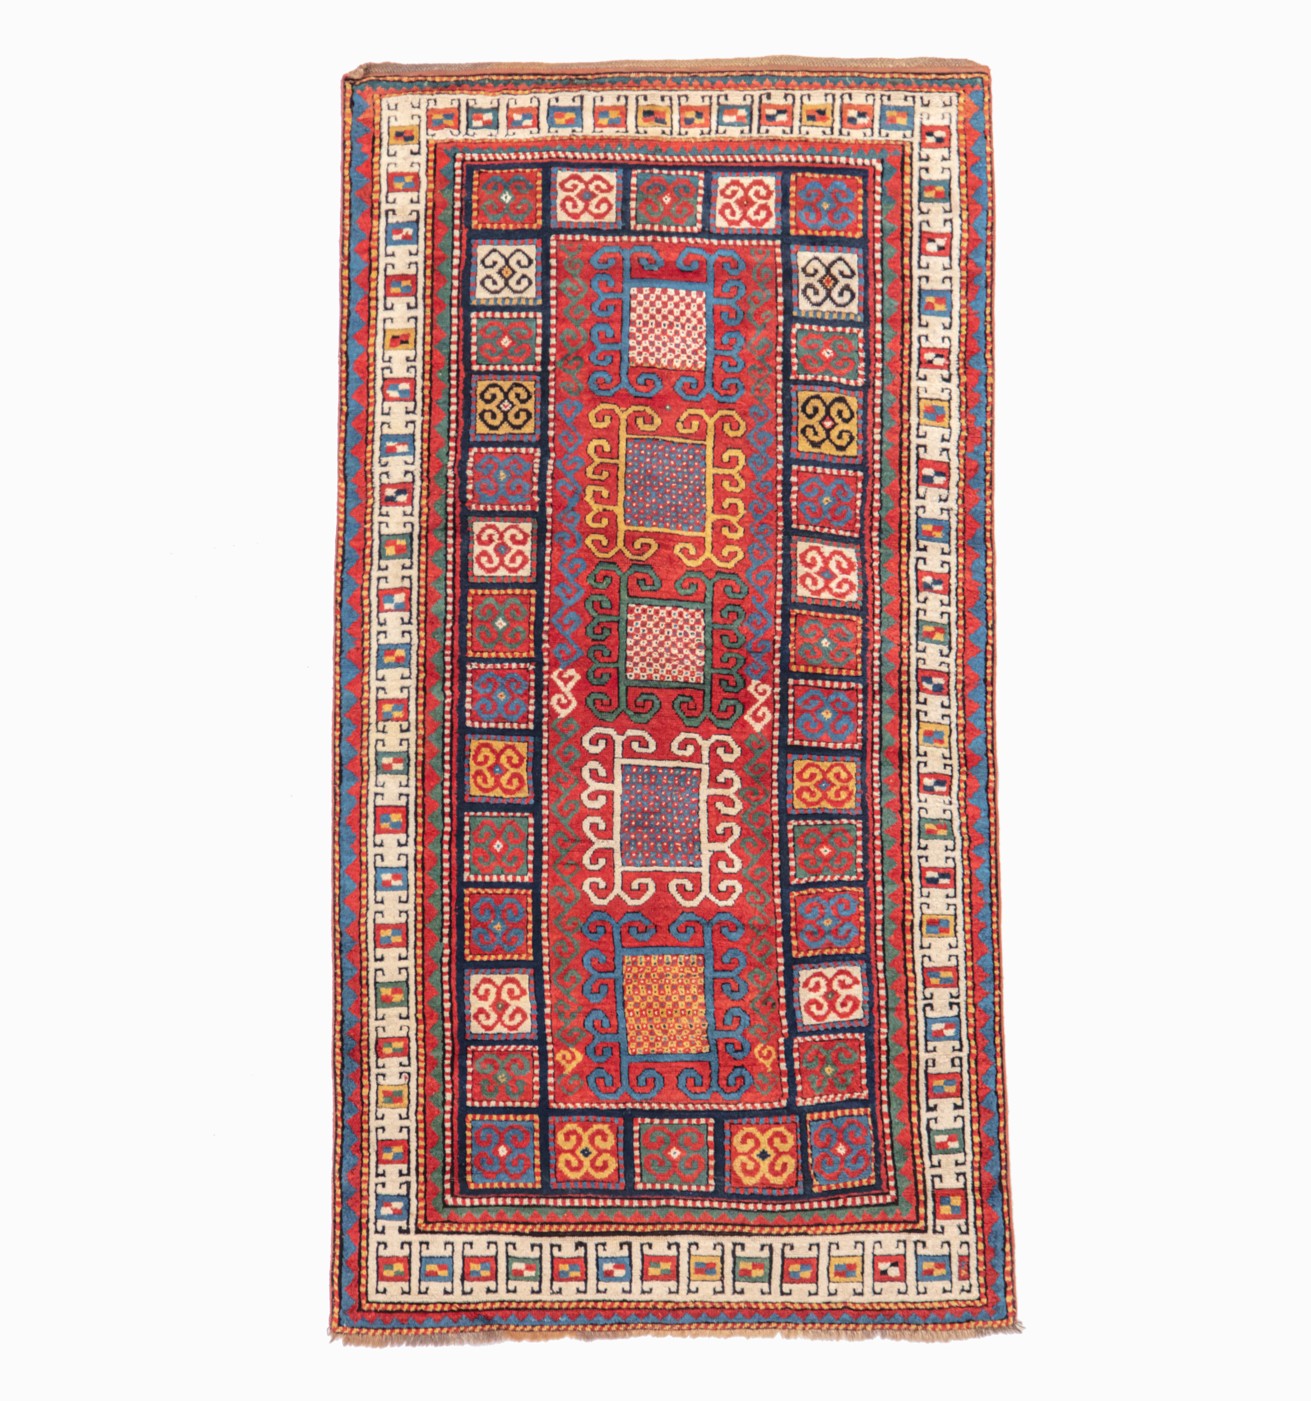 A Karacoph carpet